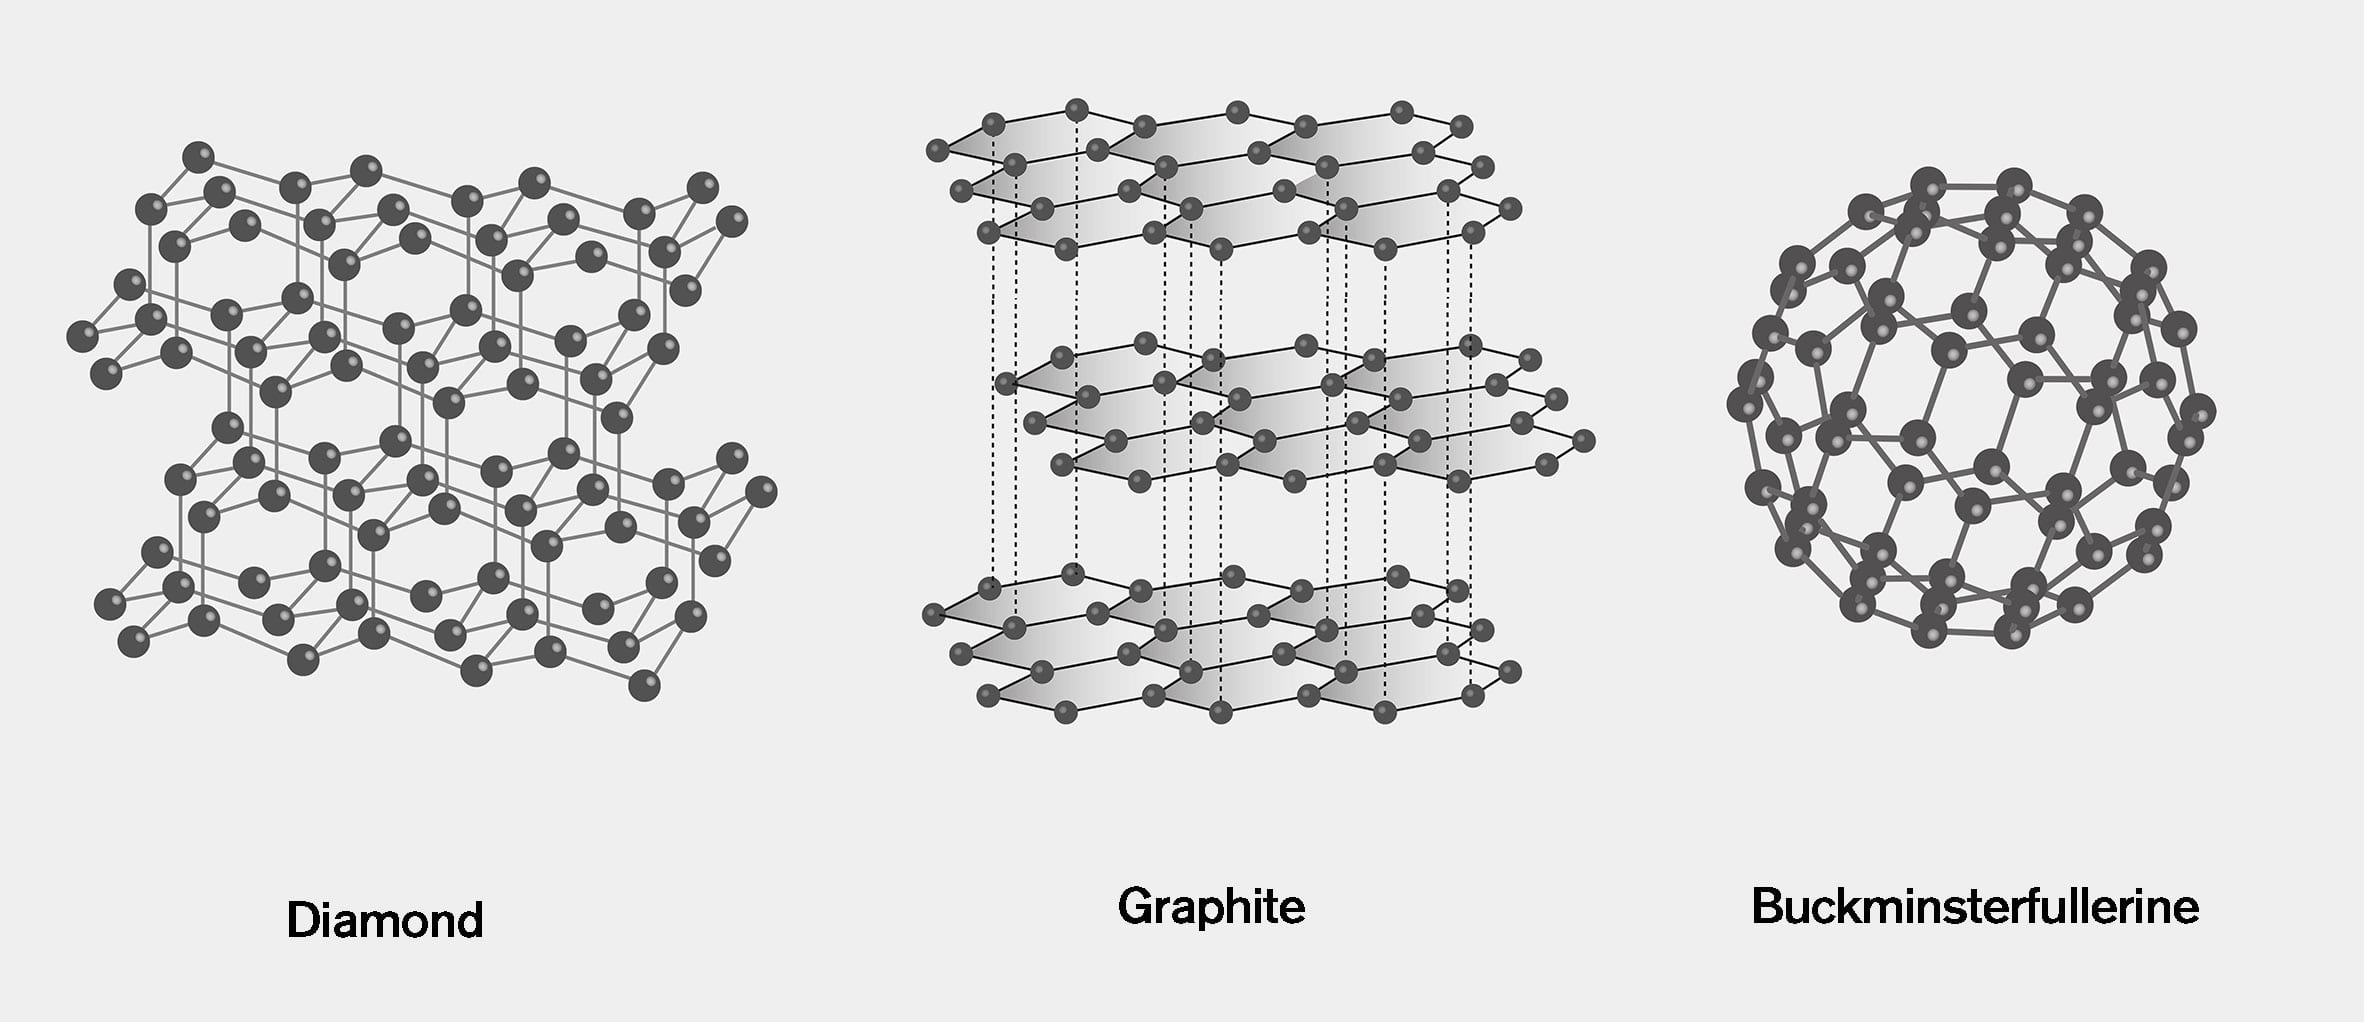 Molecular structure of carbon allotropes diamond, graphite and buckminsterfullerene